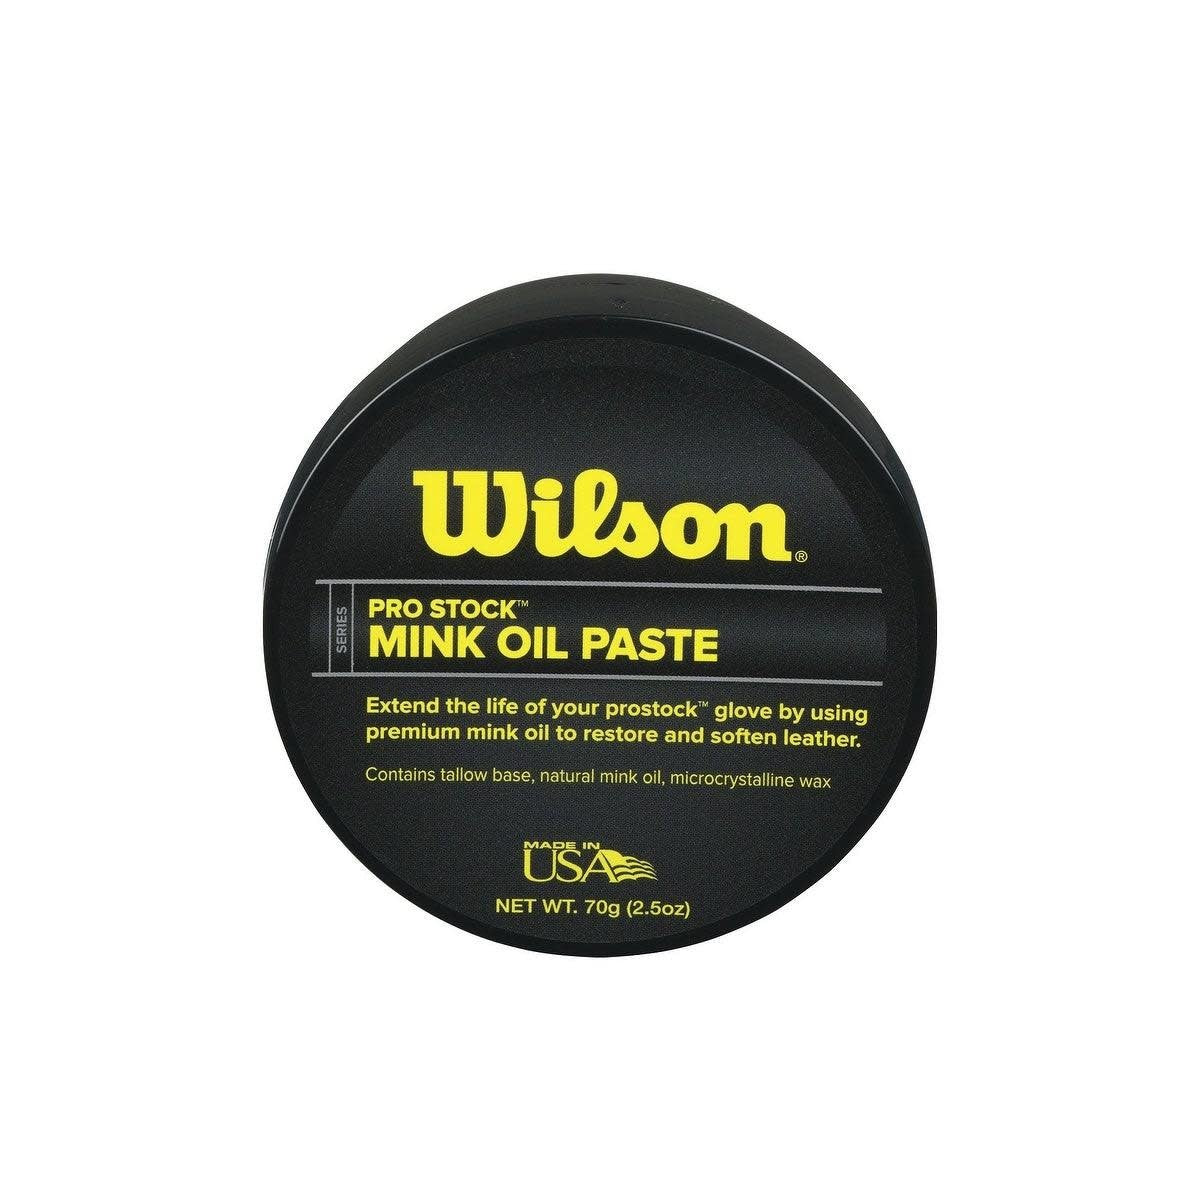 Wilson Mink Oil Paste